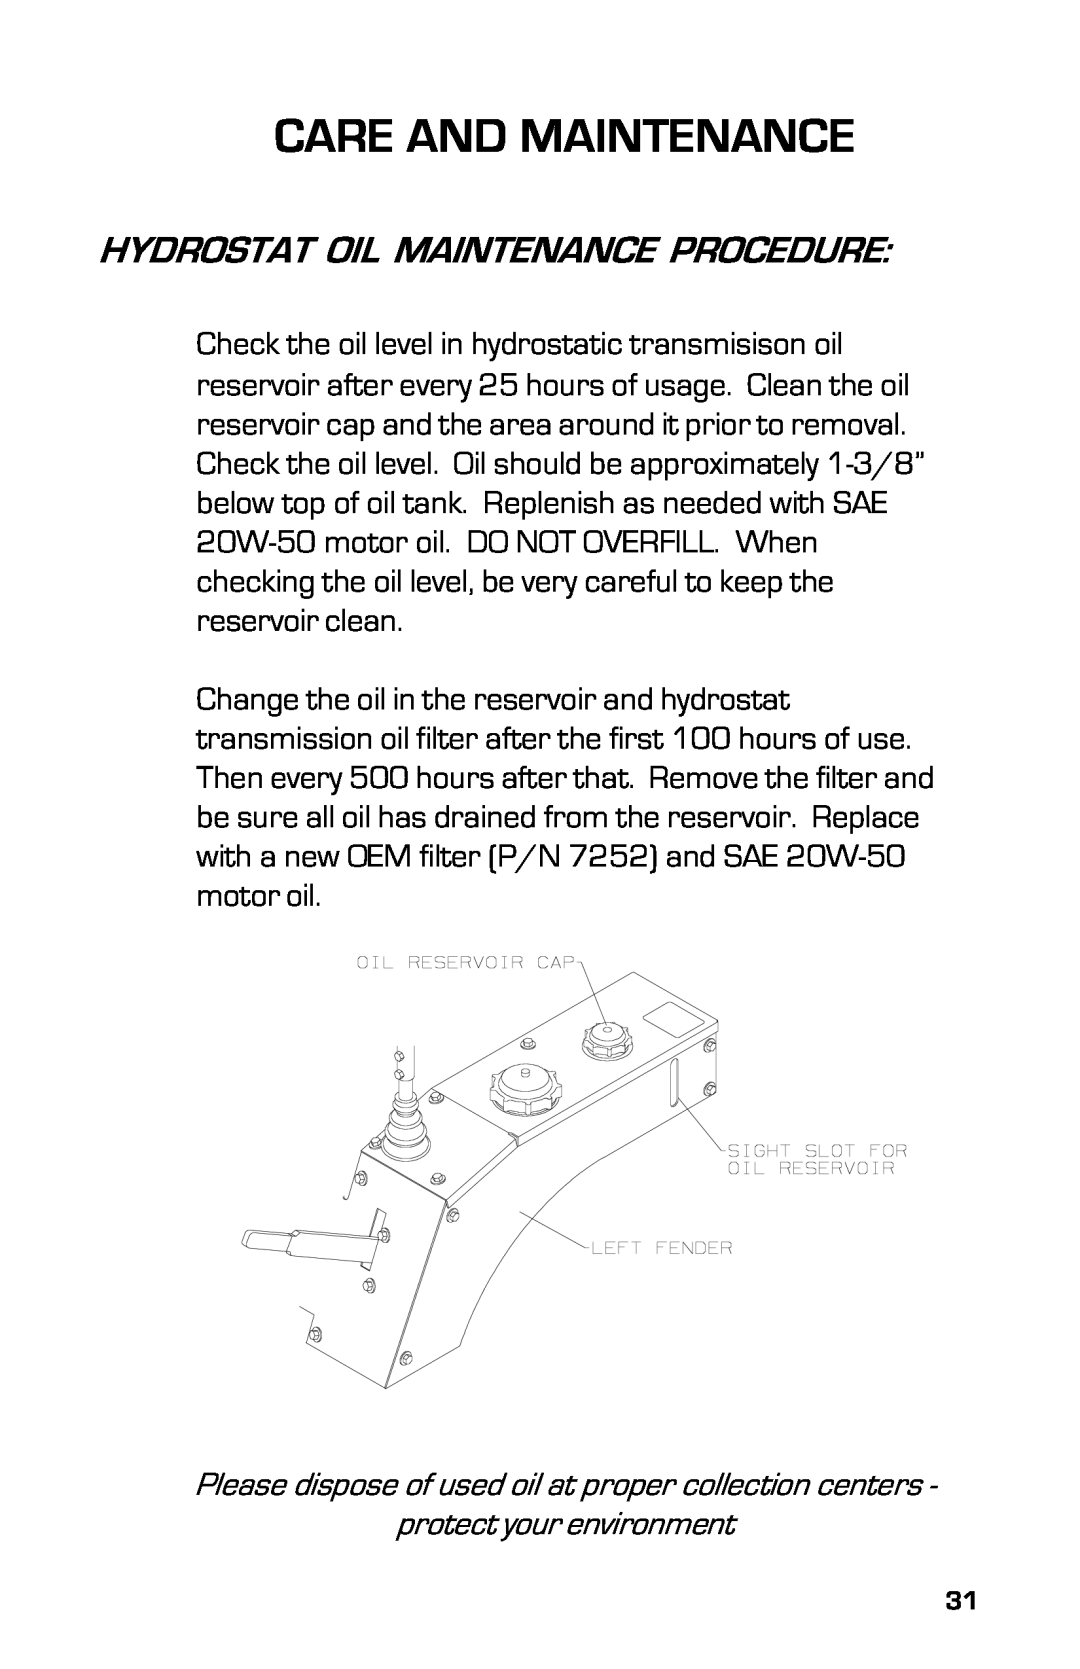 Dixon 13636-0702, ZTR 7525 manual Hydrostat Oil Maintenance Procedure, Care And Maintenance 